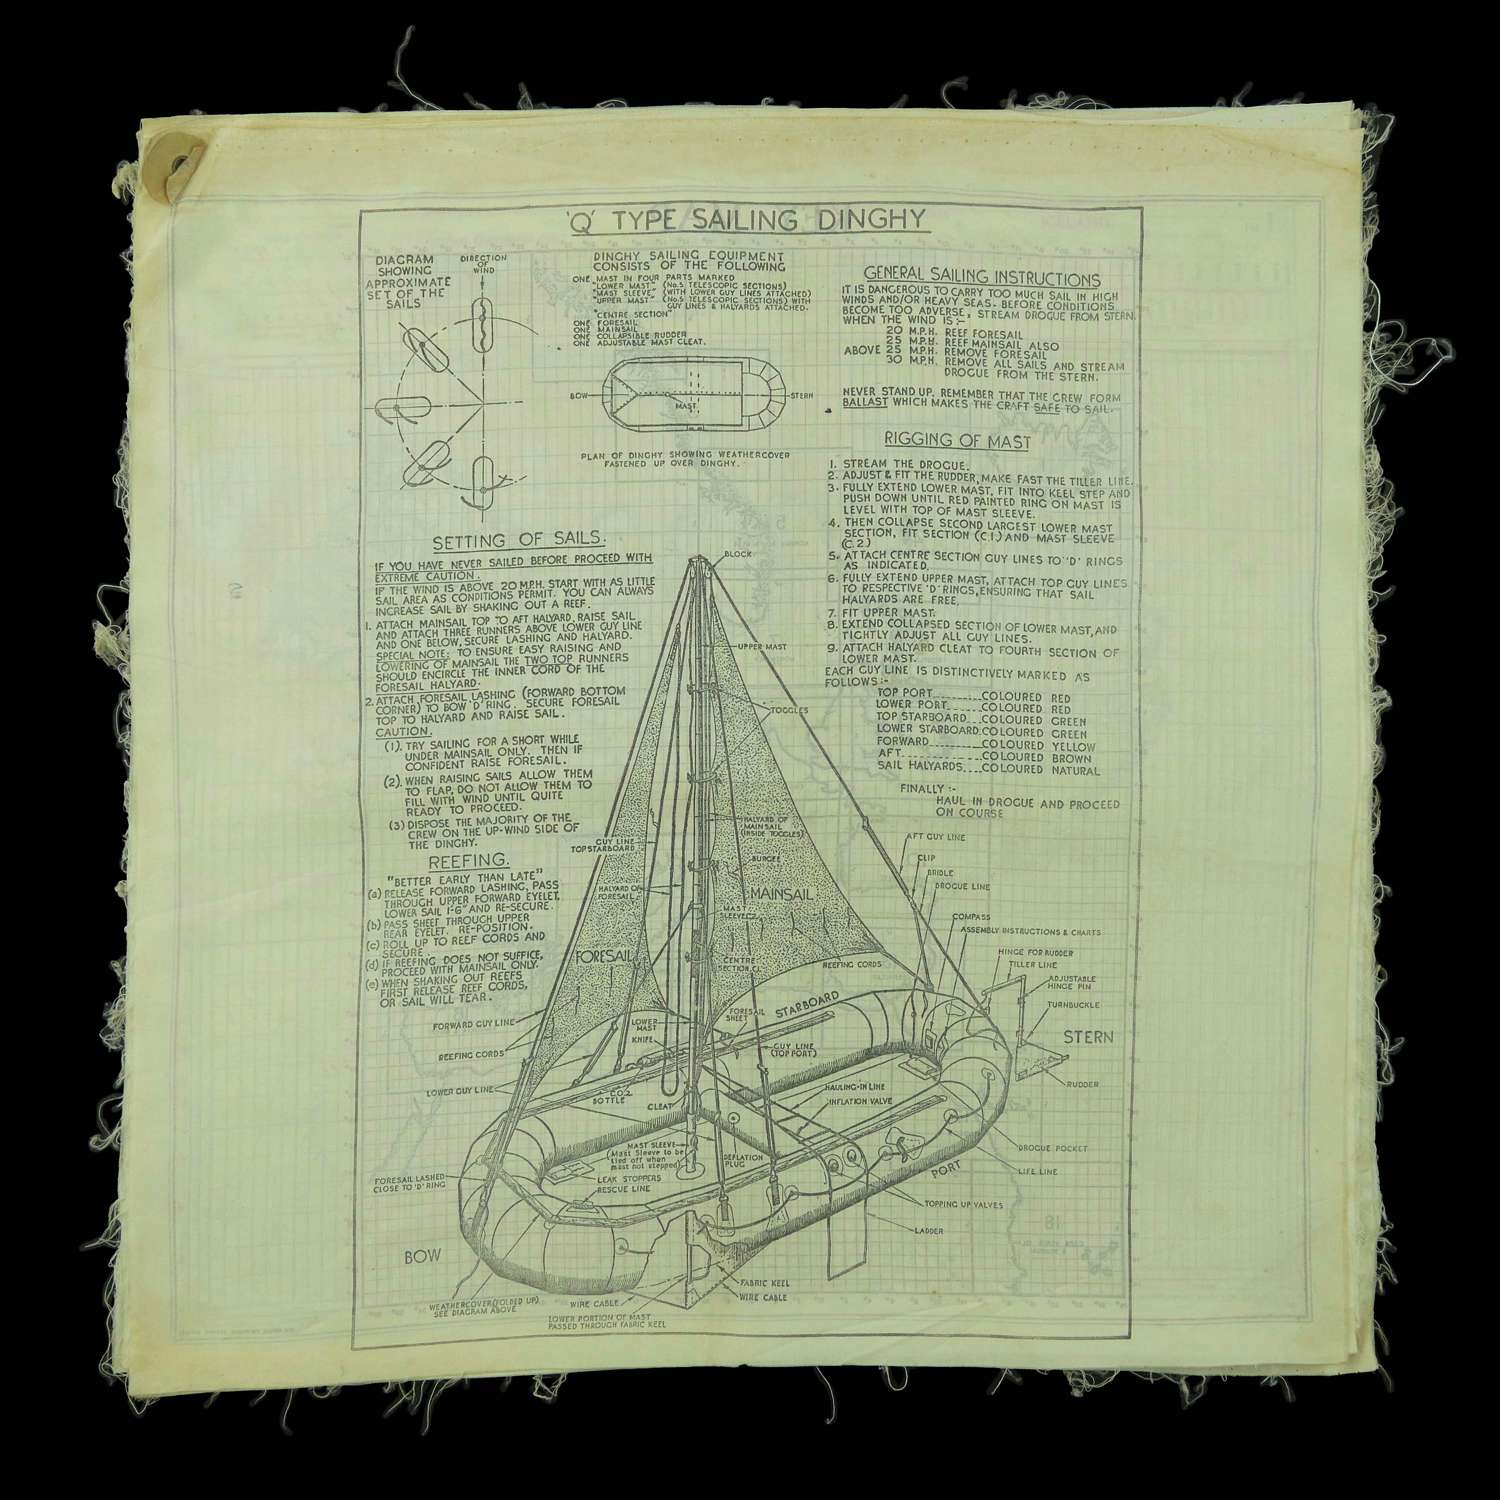 RAF Type Q dinghy sailing instructions & maps